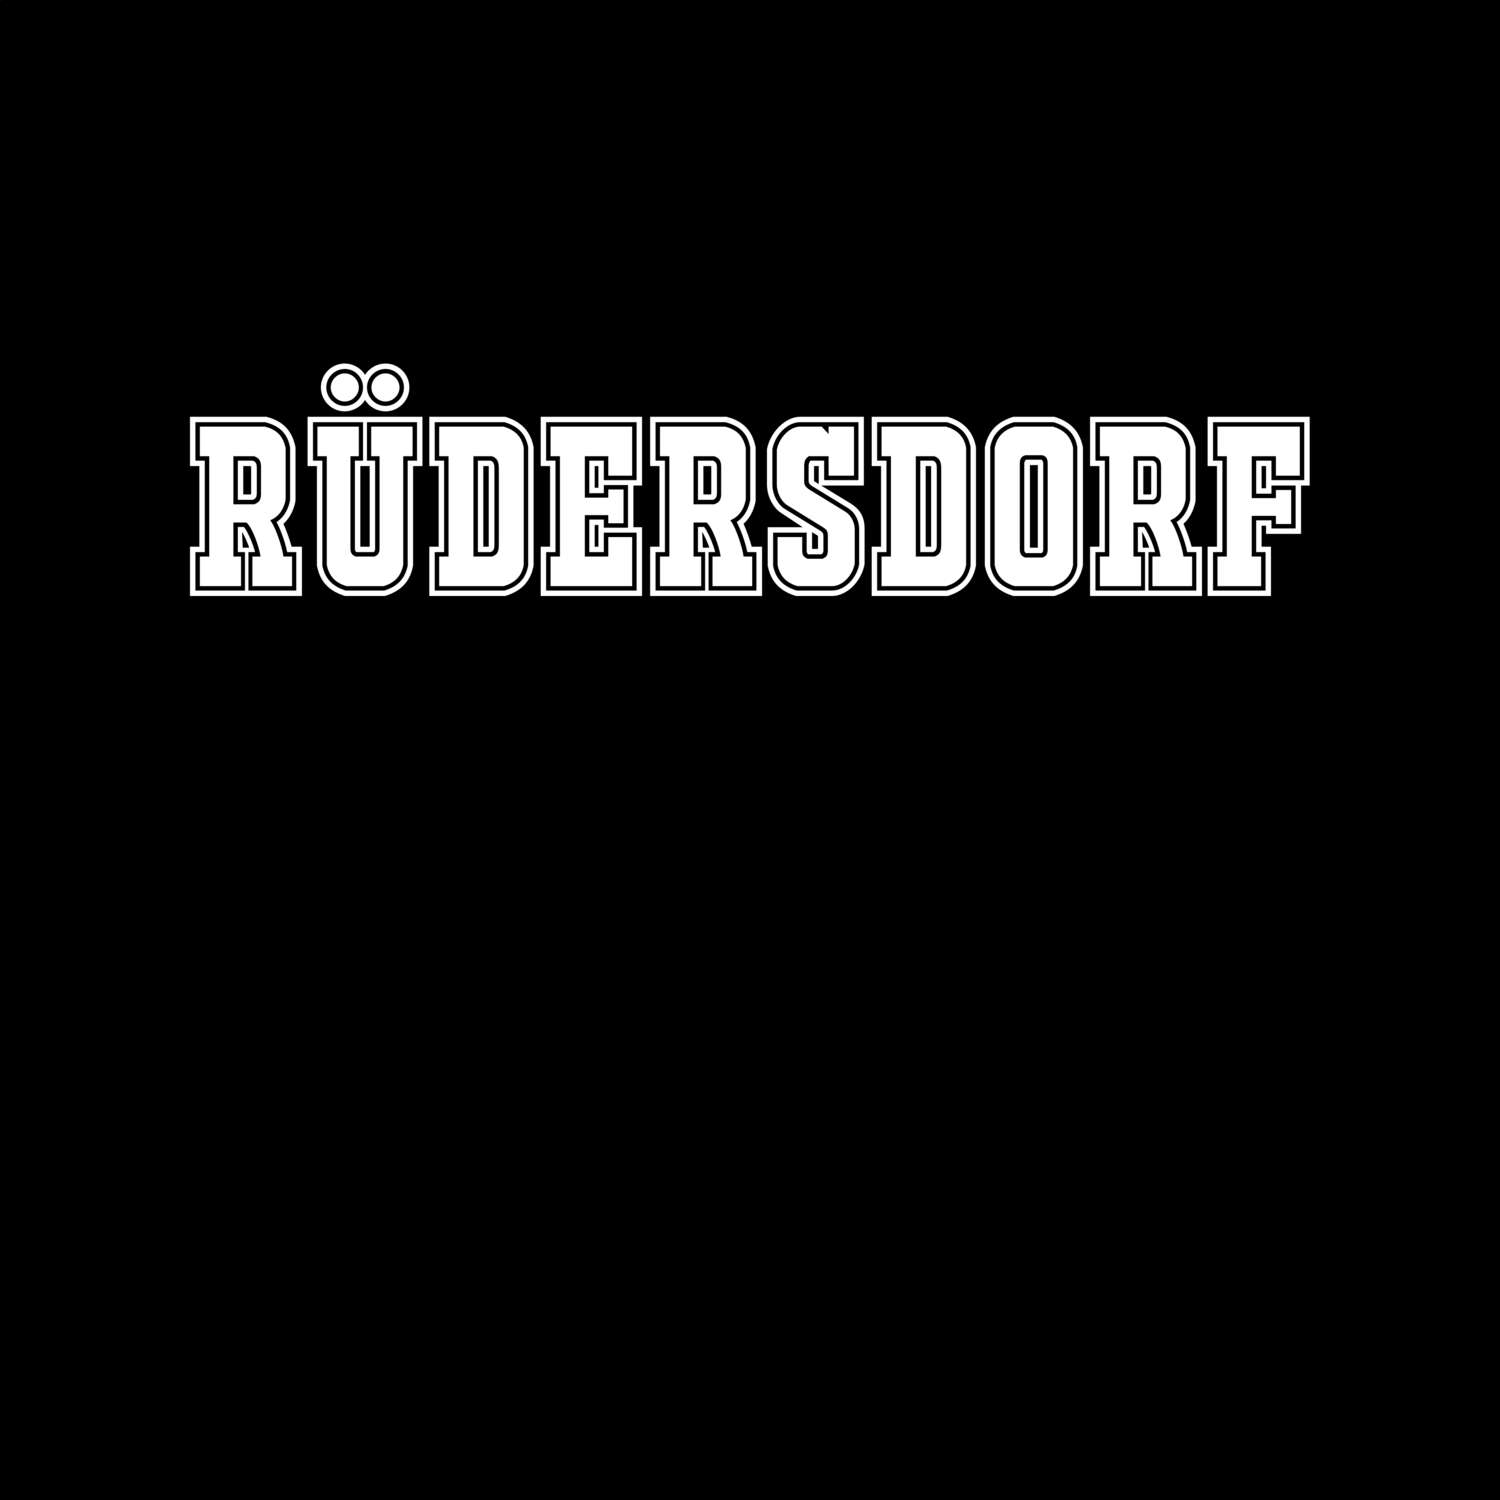 Rüdersdorf T-Shirt »Classic«